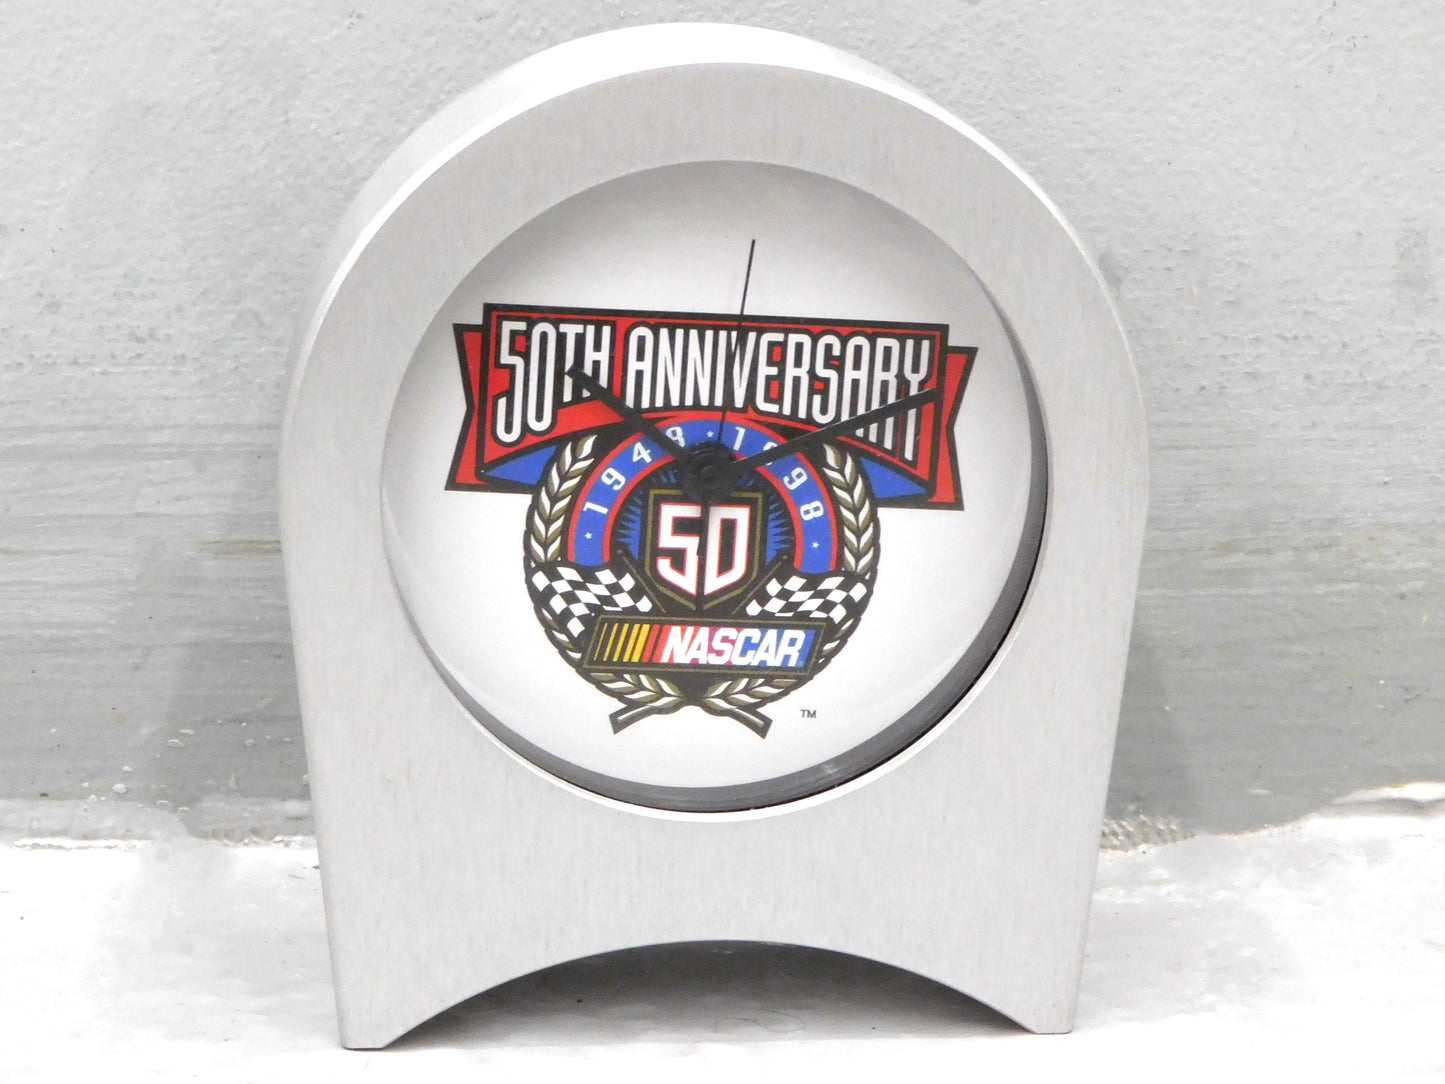 NASCAR 50th Anniversary Clock